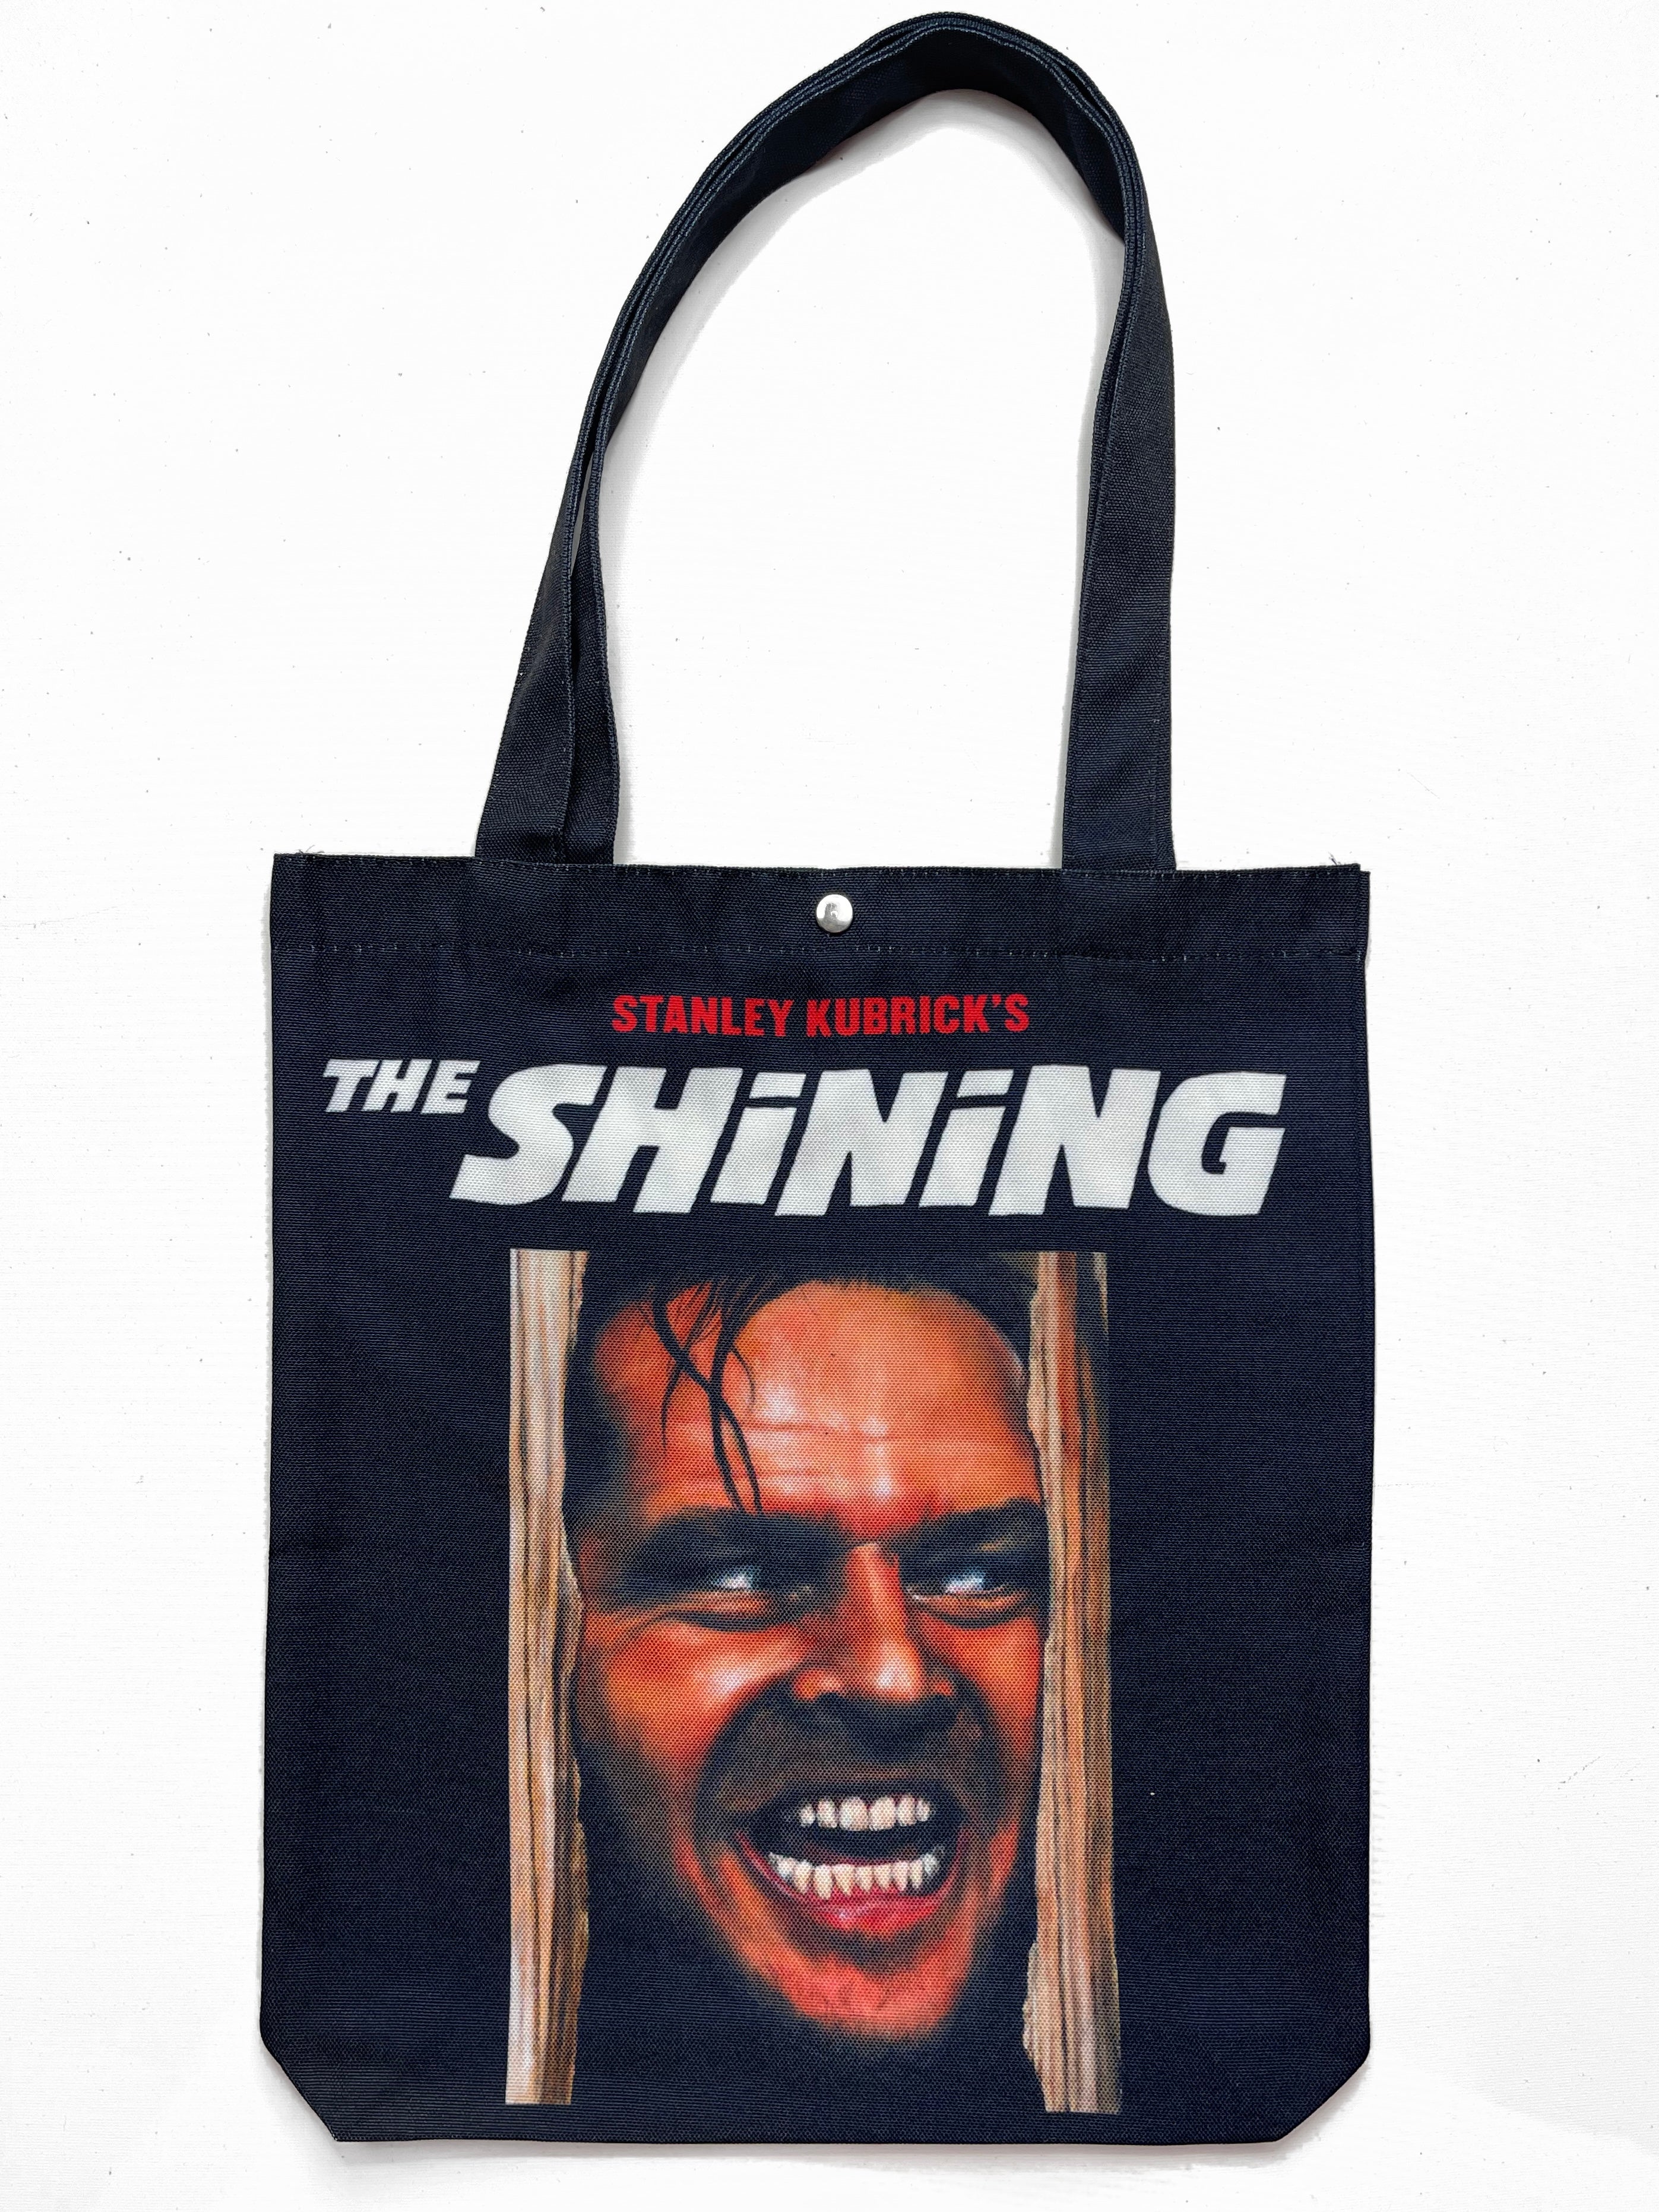 The Shining Tote Bag